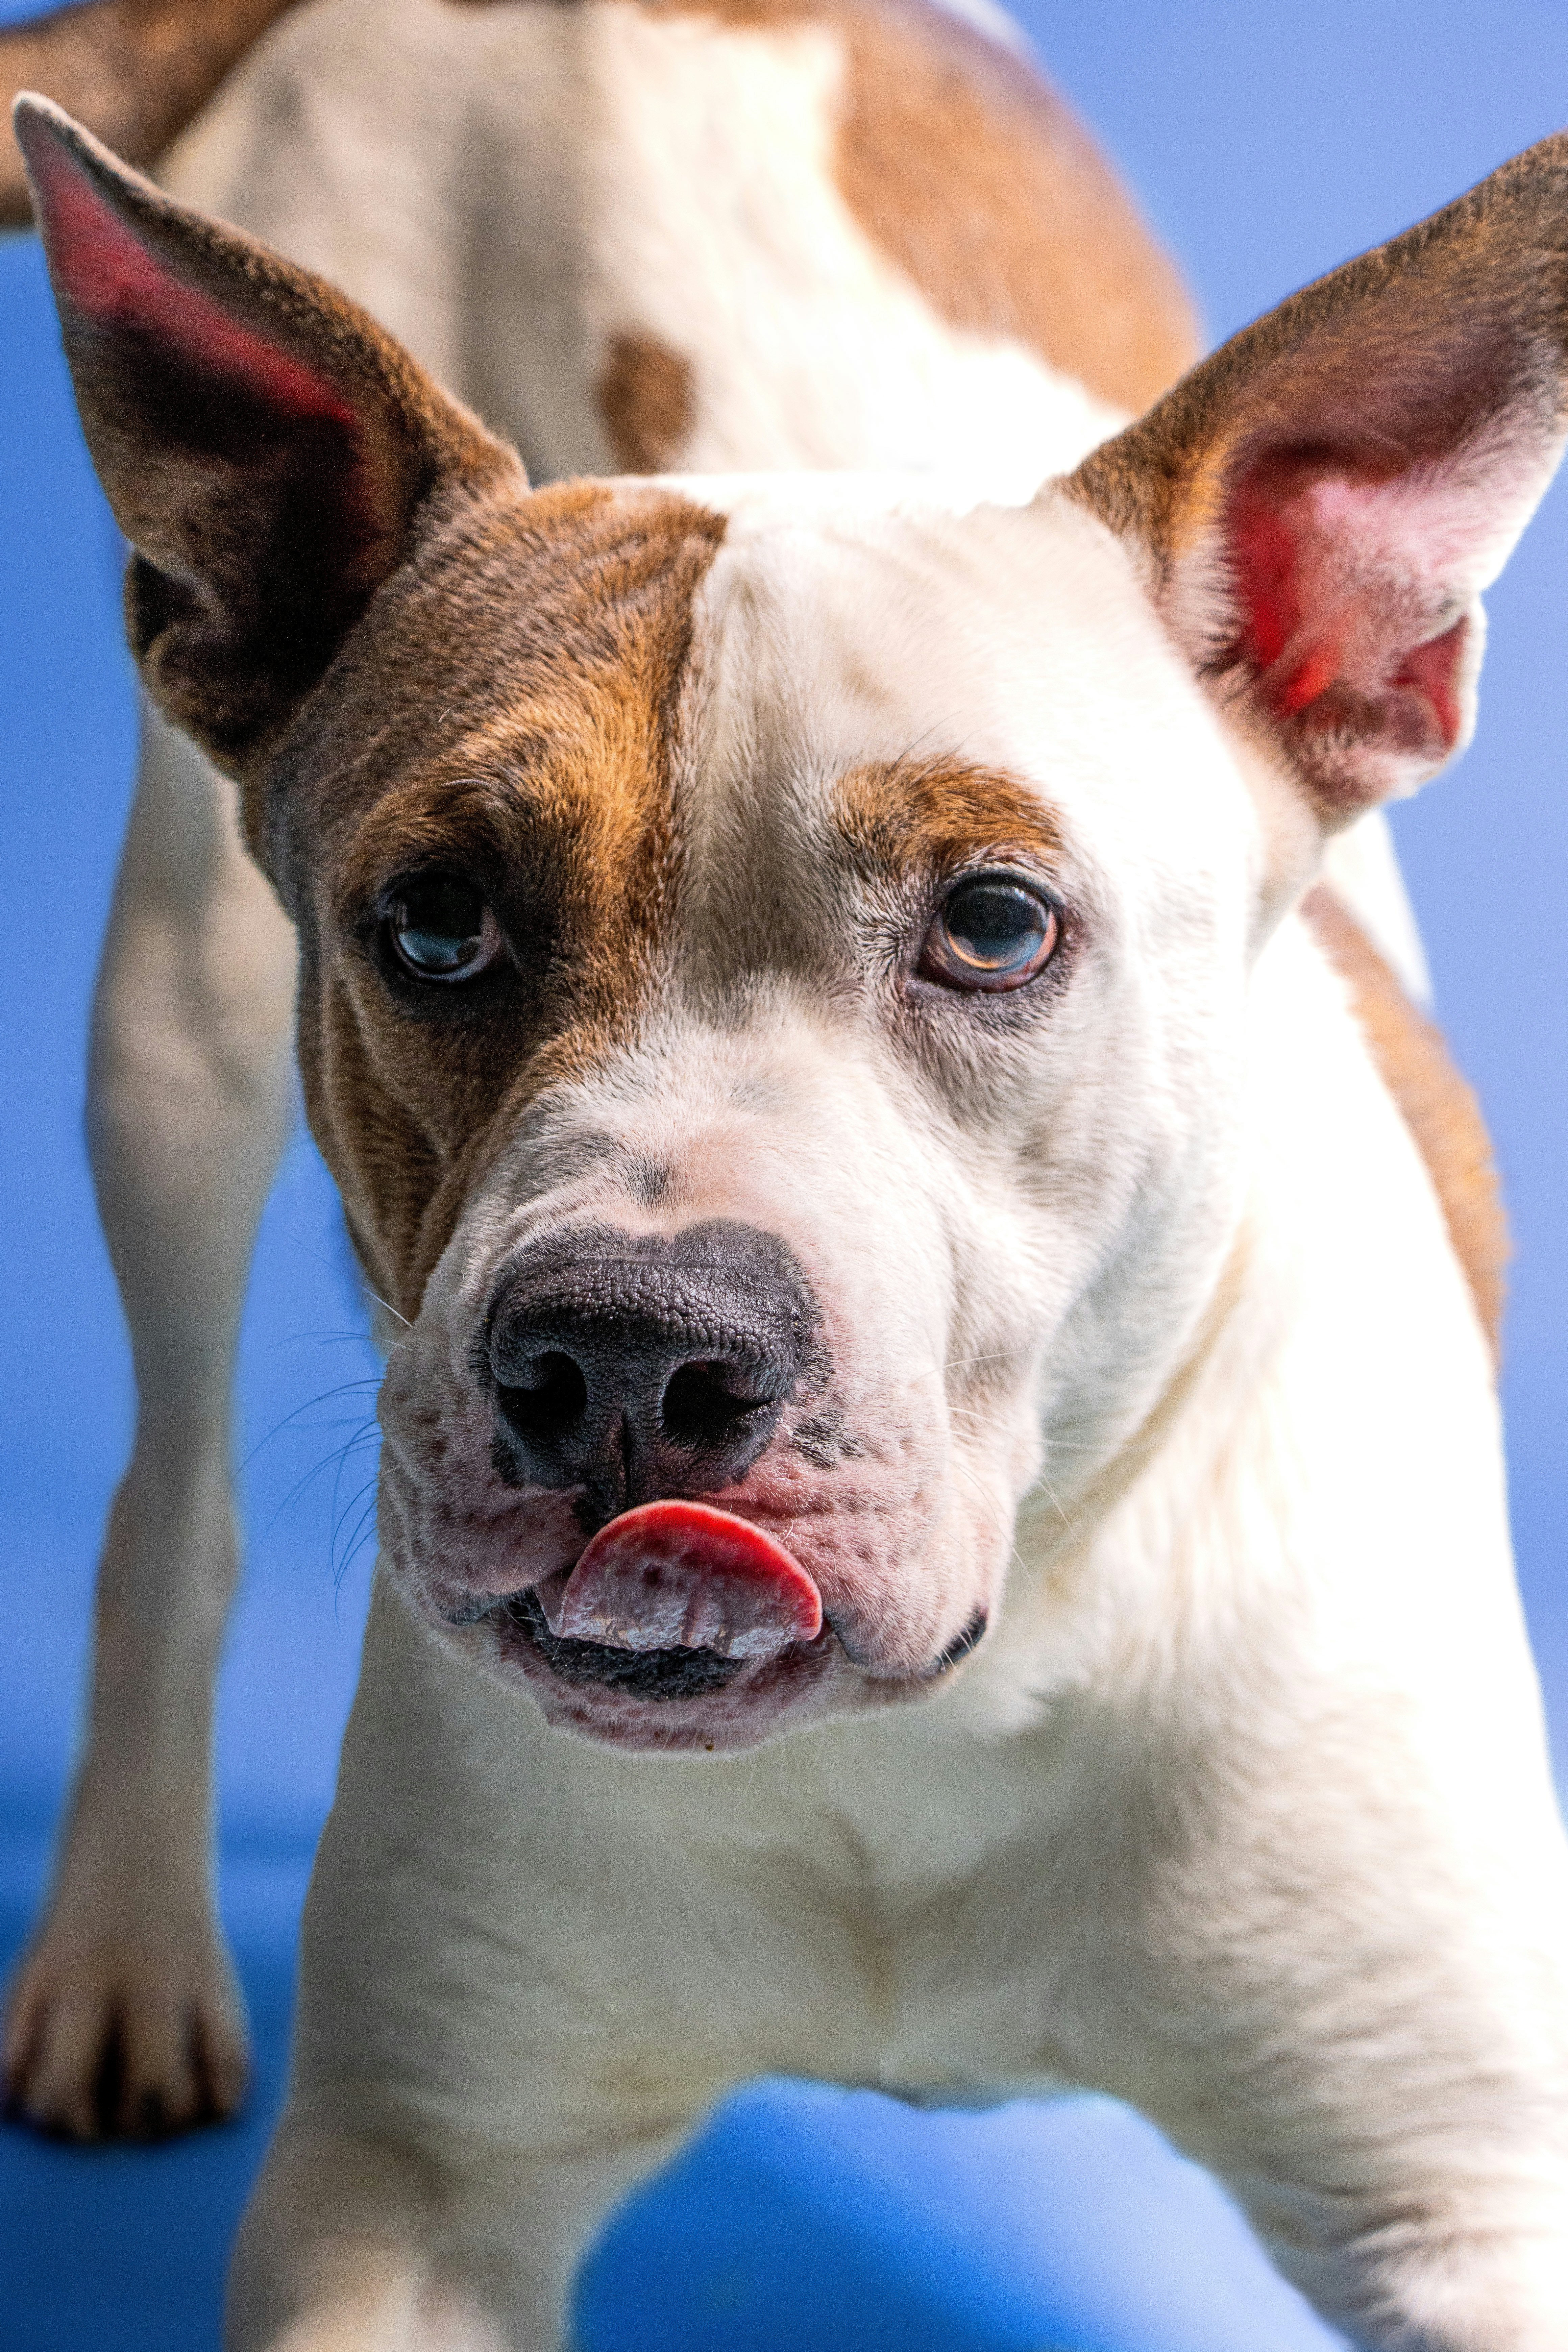 Doggo up for adoption through Lubbock animal shelter TX!